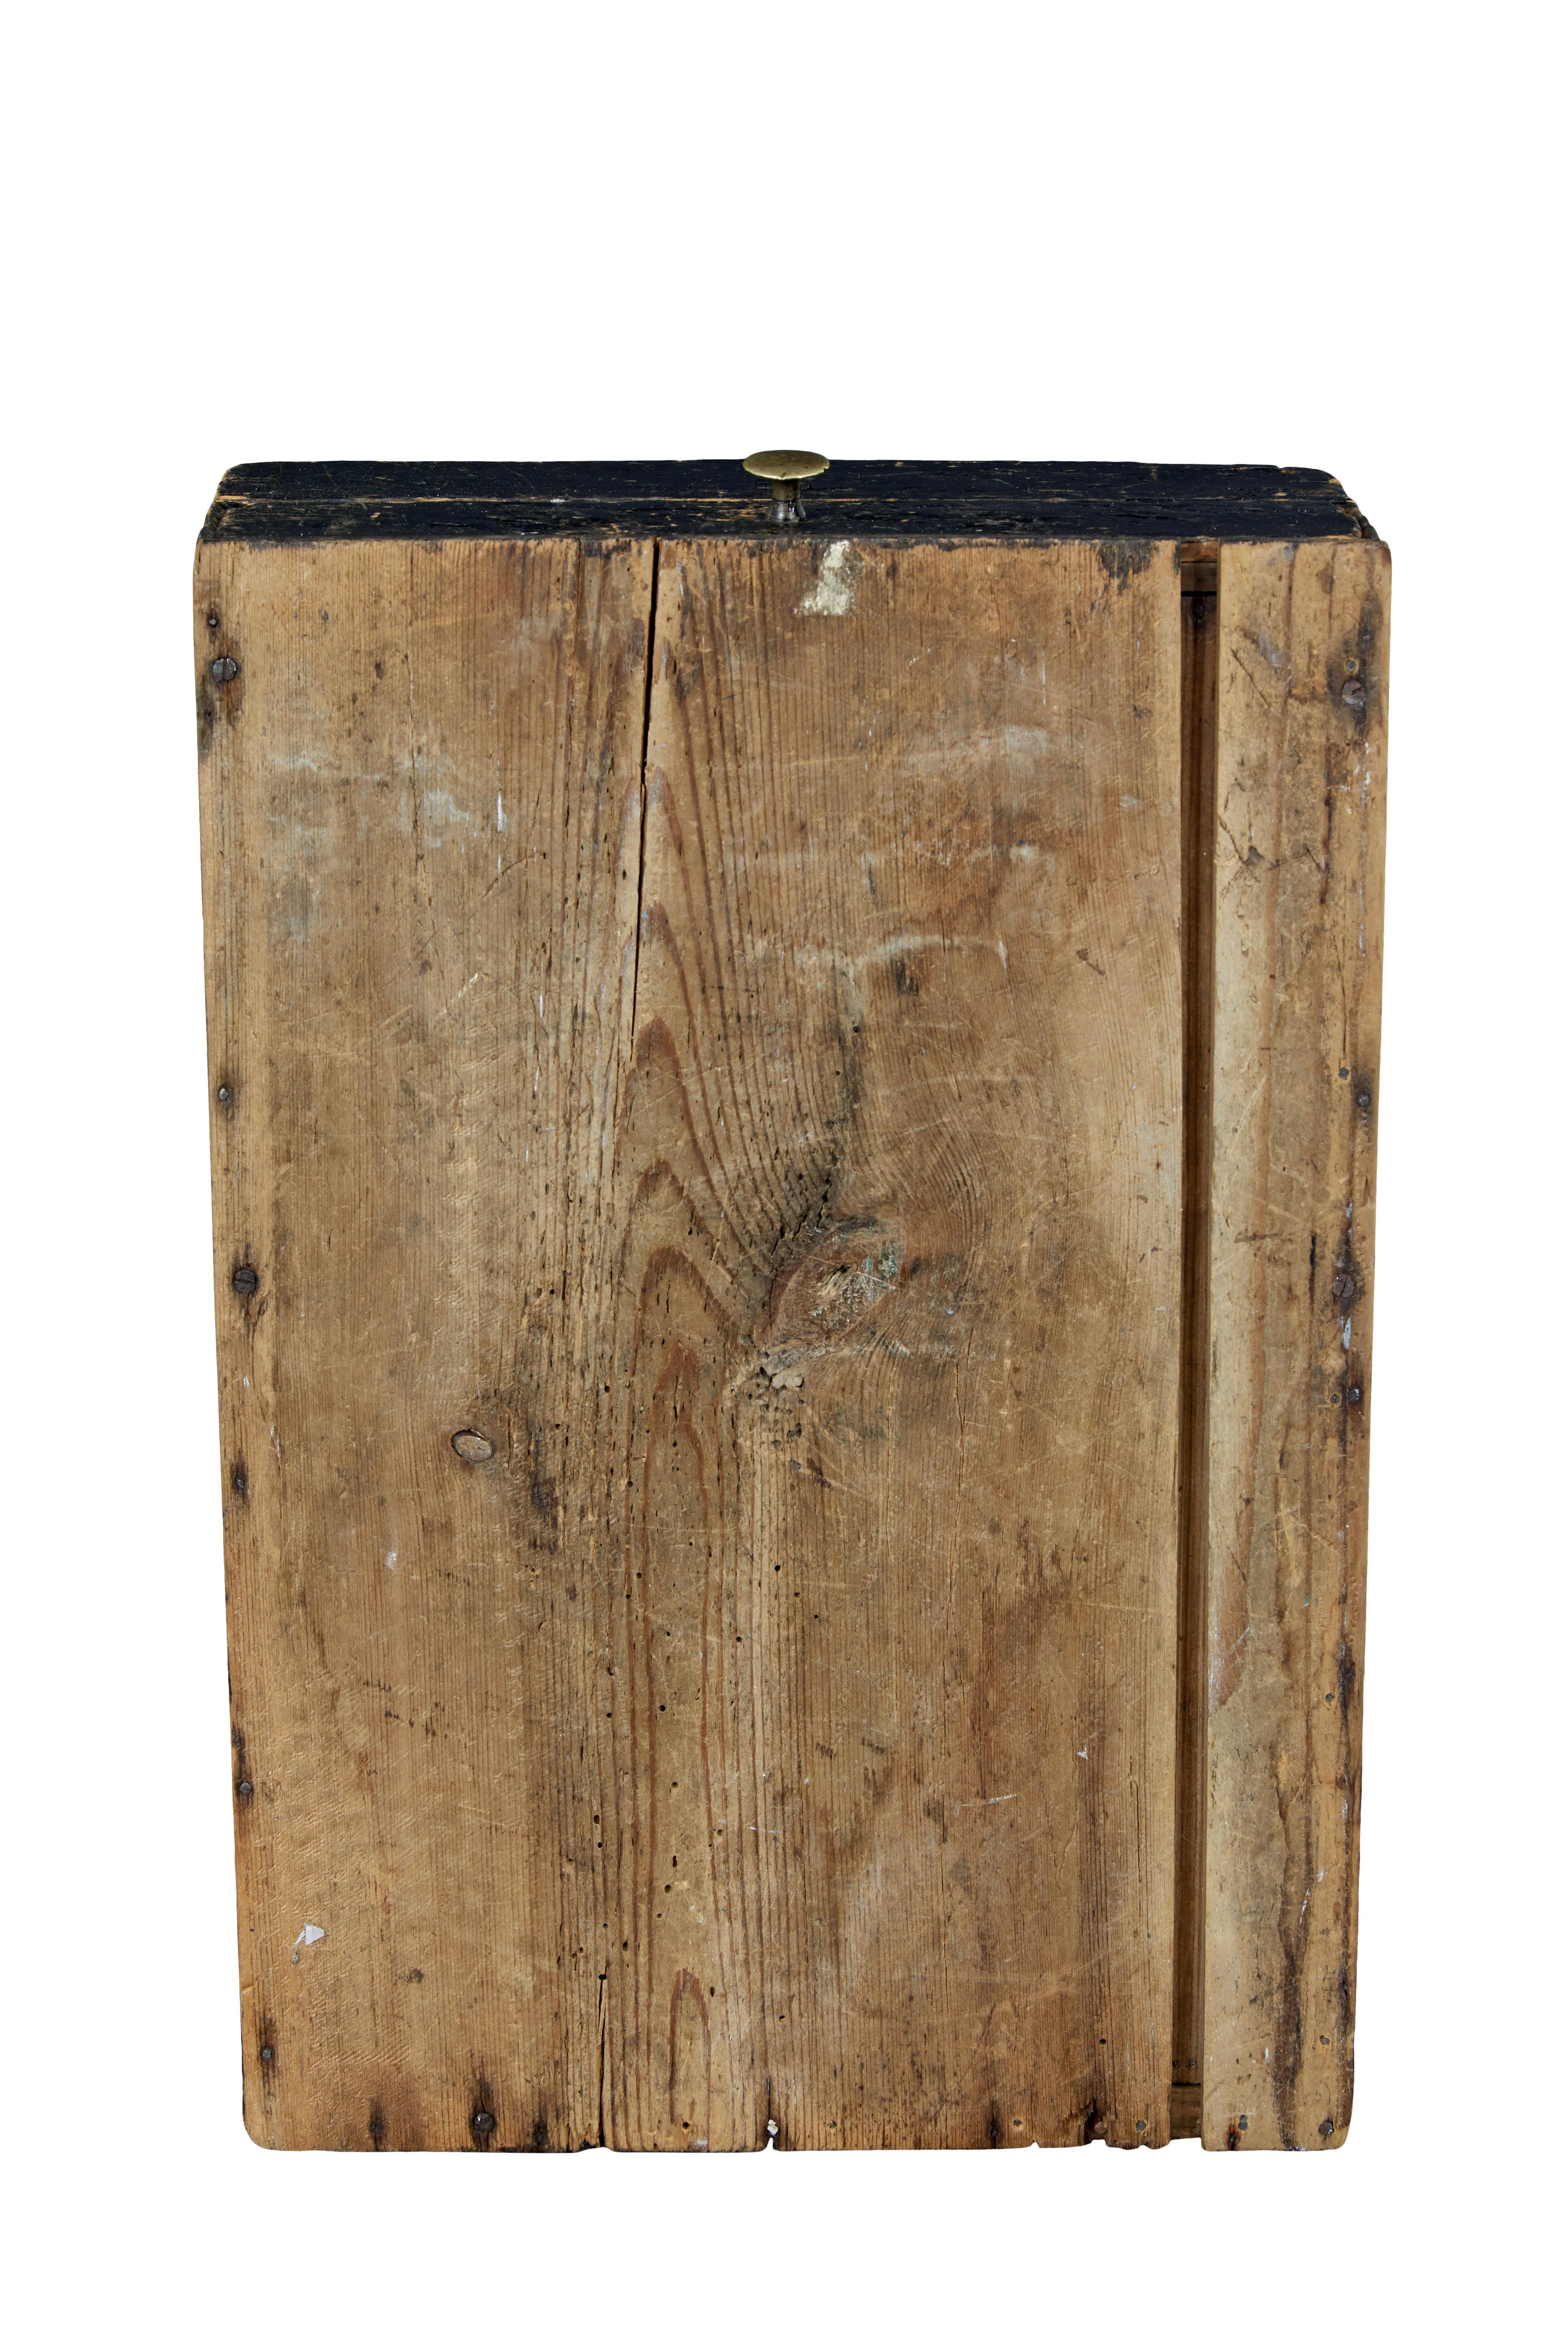 19th Century 19th century Scandinavian rustic pine cutlery box For Sale